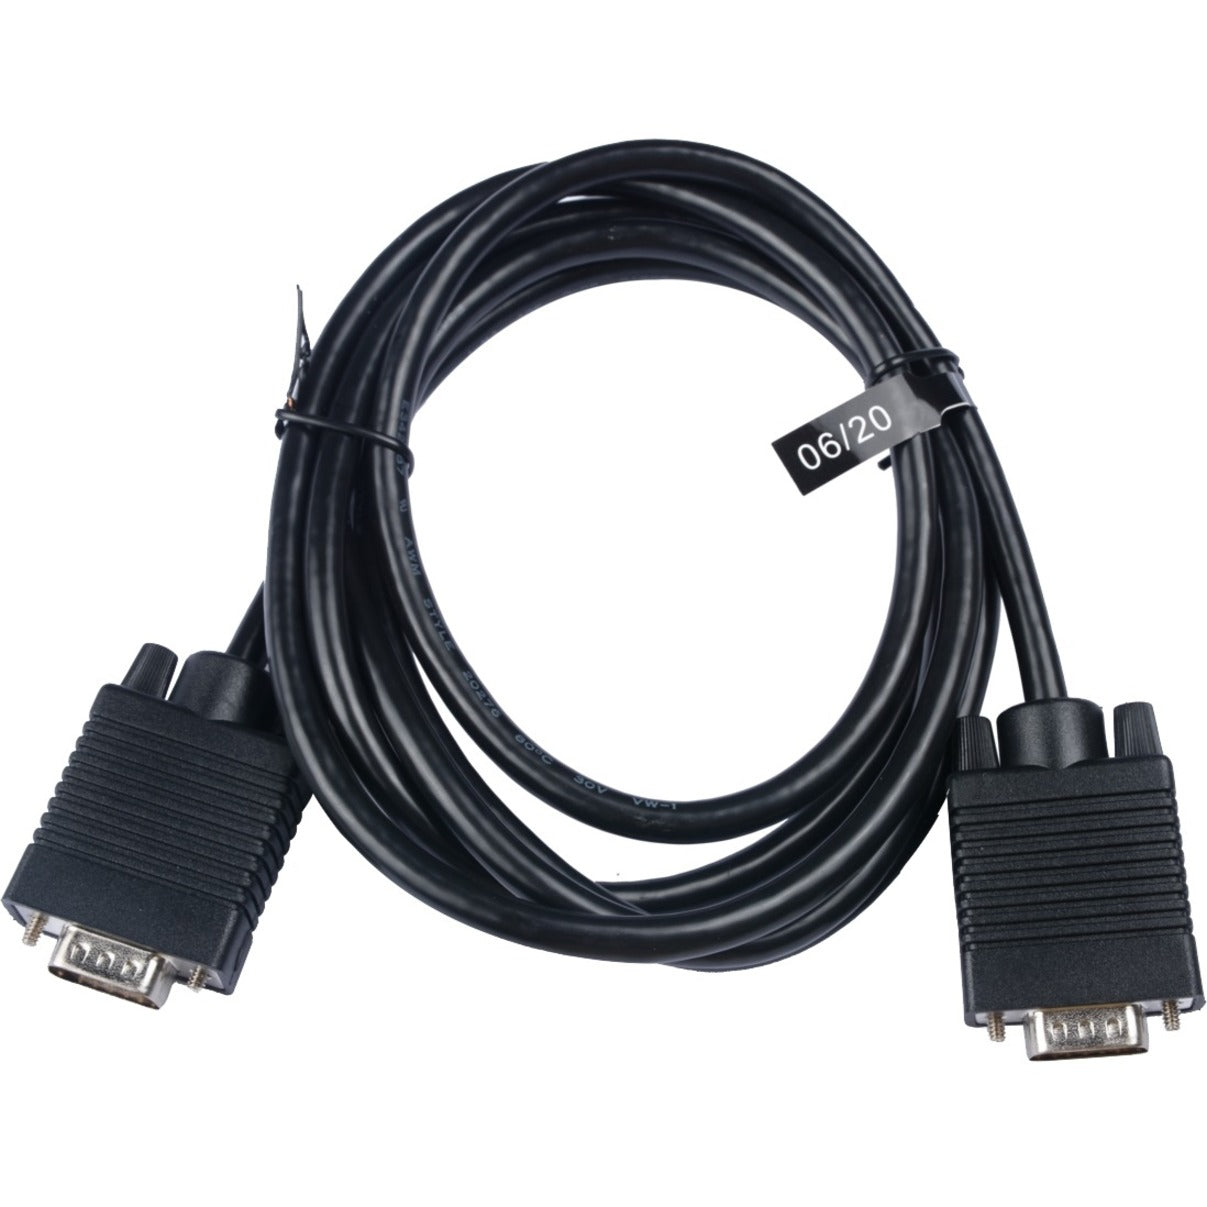 V7 Black Video Cable VGA Male to VGA Male 2m 6.6ft